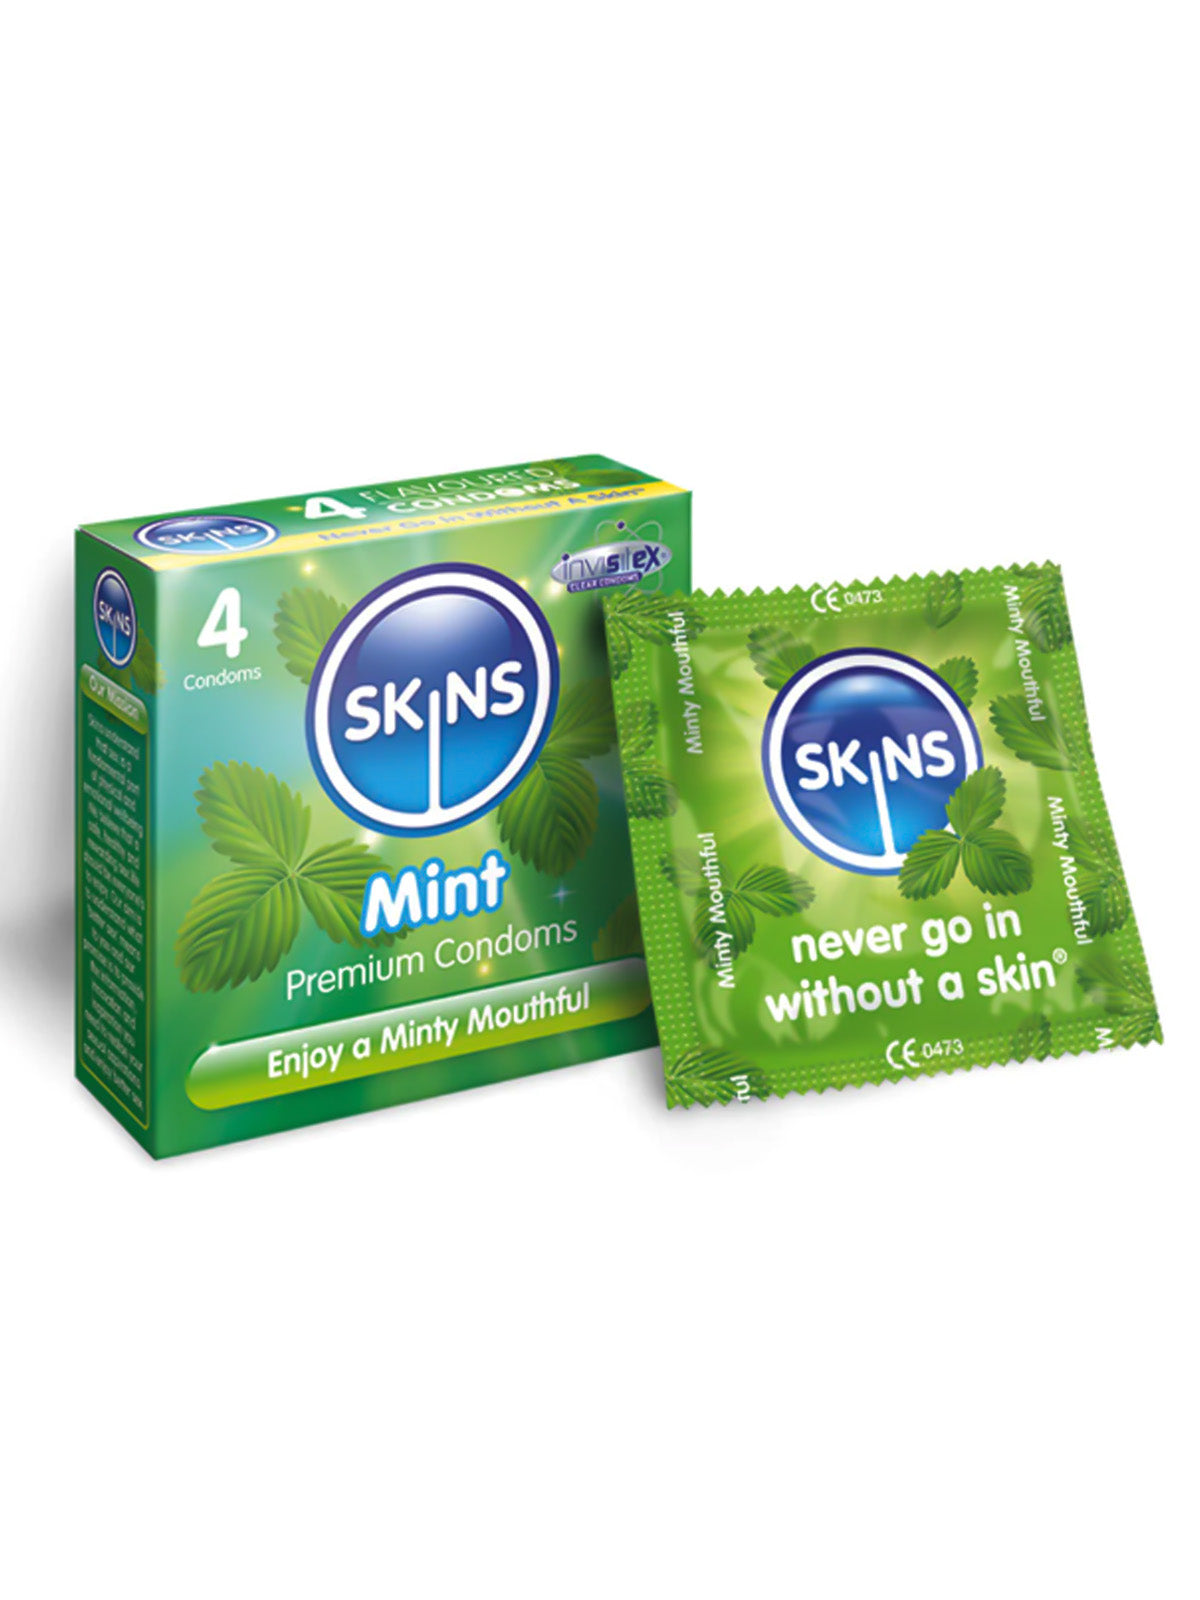 Skins (UK) Condoms 4 Pack - Mint